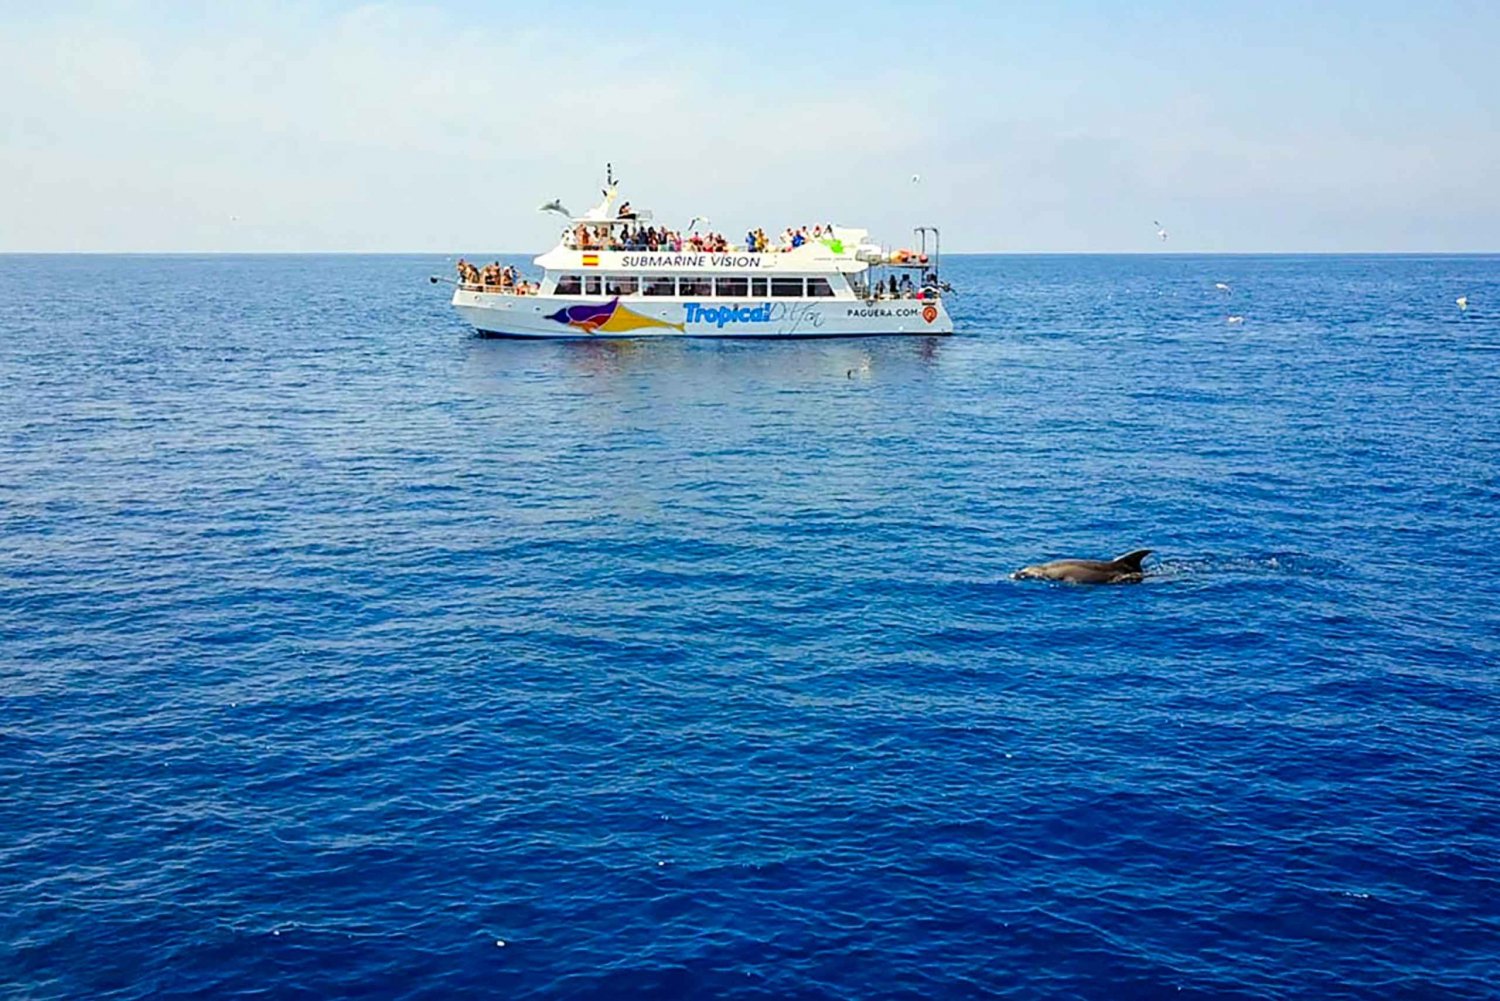 Mallorca: Dolphin Watching Cruise